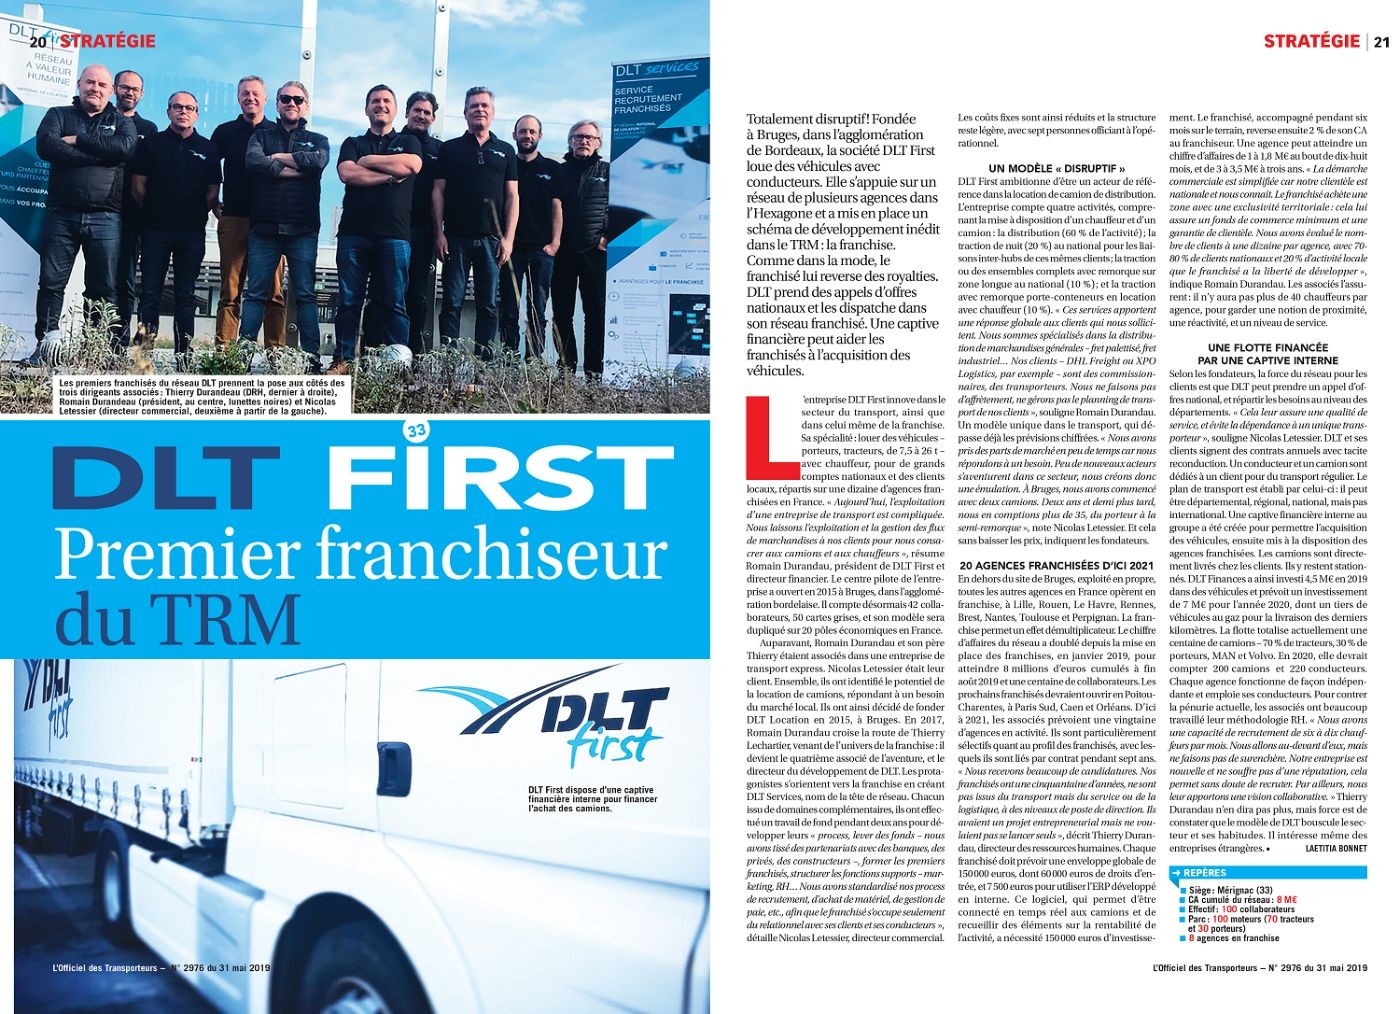 Article DLT First dans l'officiel des transporteurs